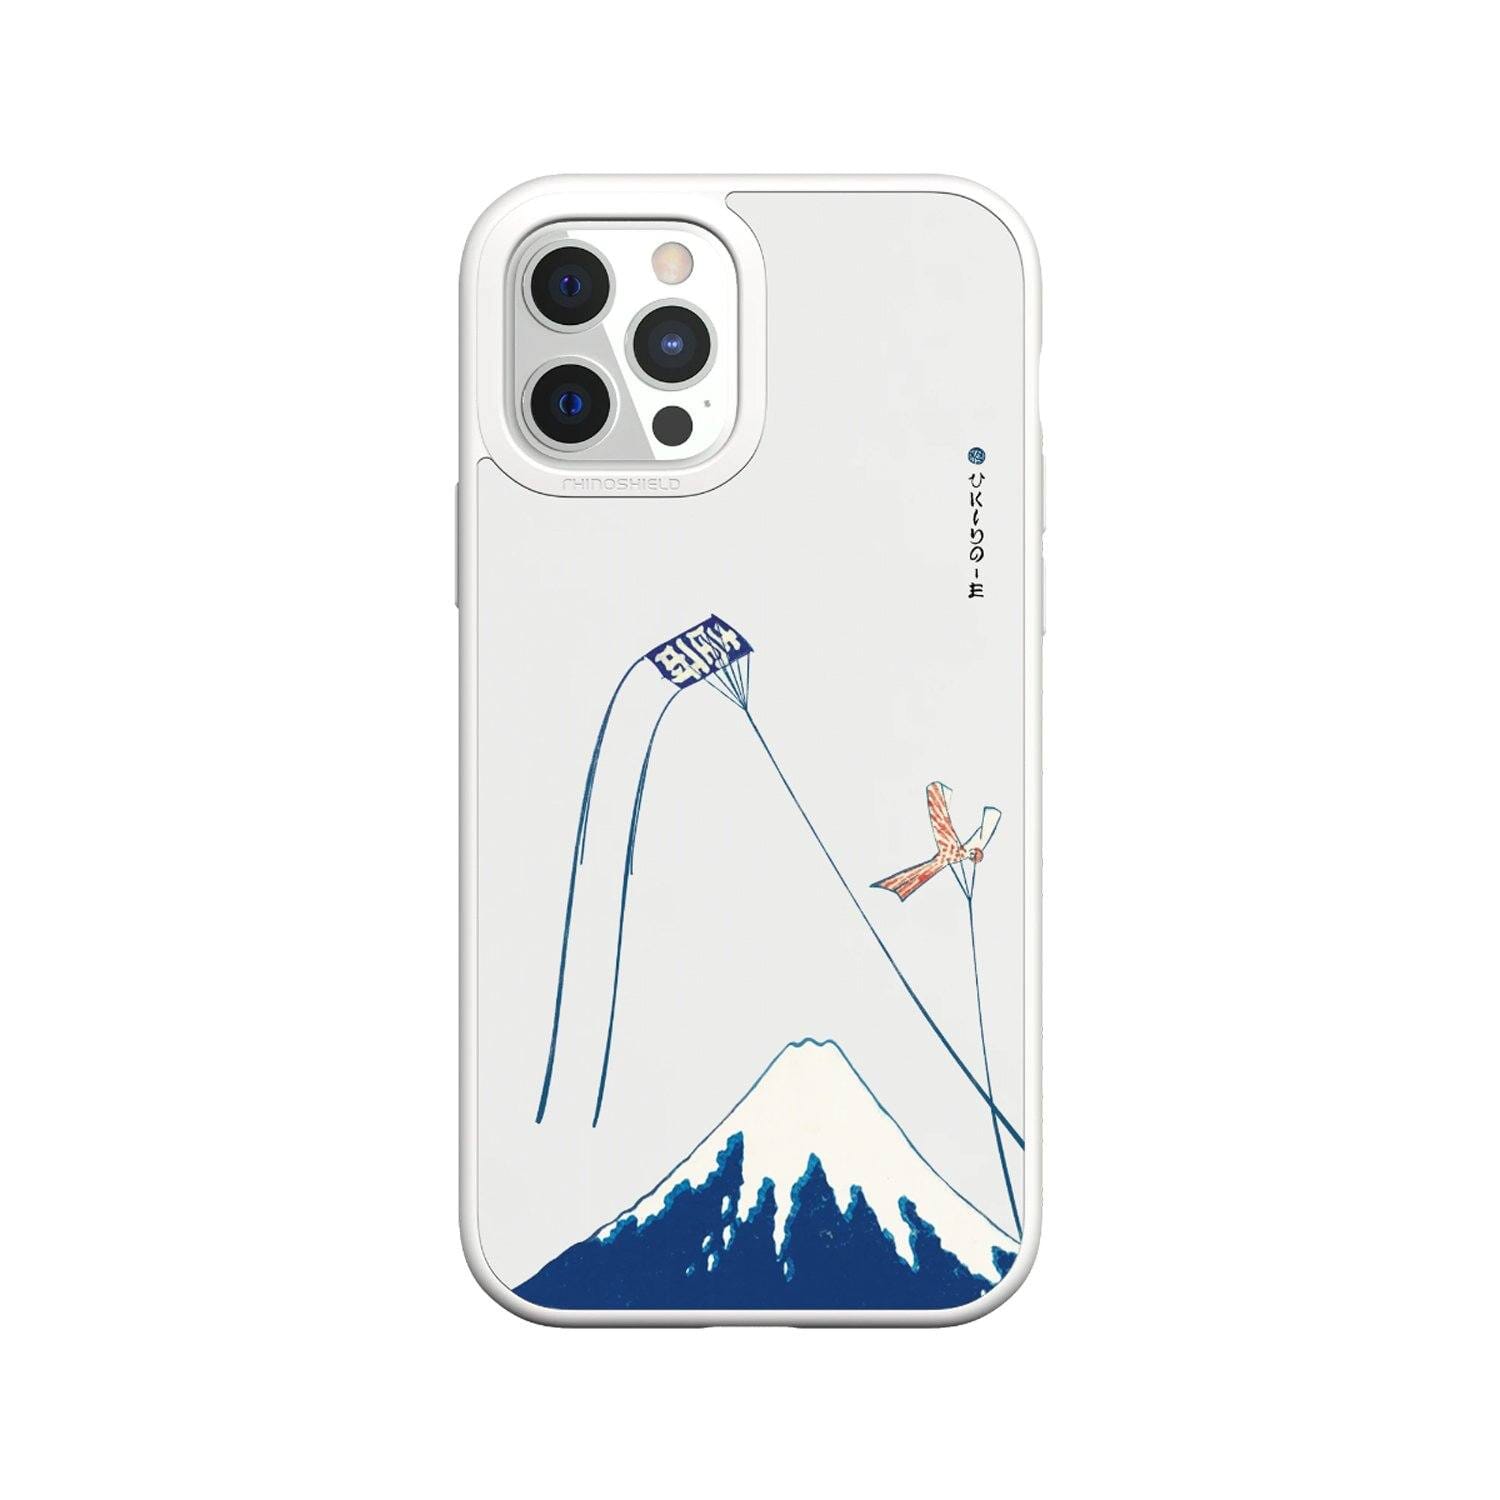 RhinoShield SolidSuit Design Case for iPhone 12 Series (2020) Default RhinoShield iPhone 12 Pro Max 6.7" White/Mount Fuji 